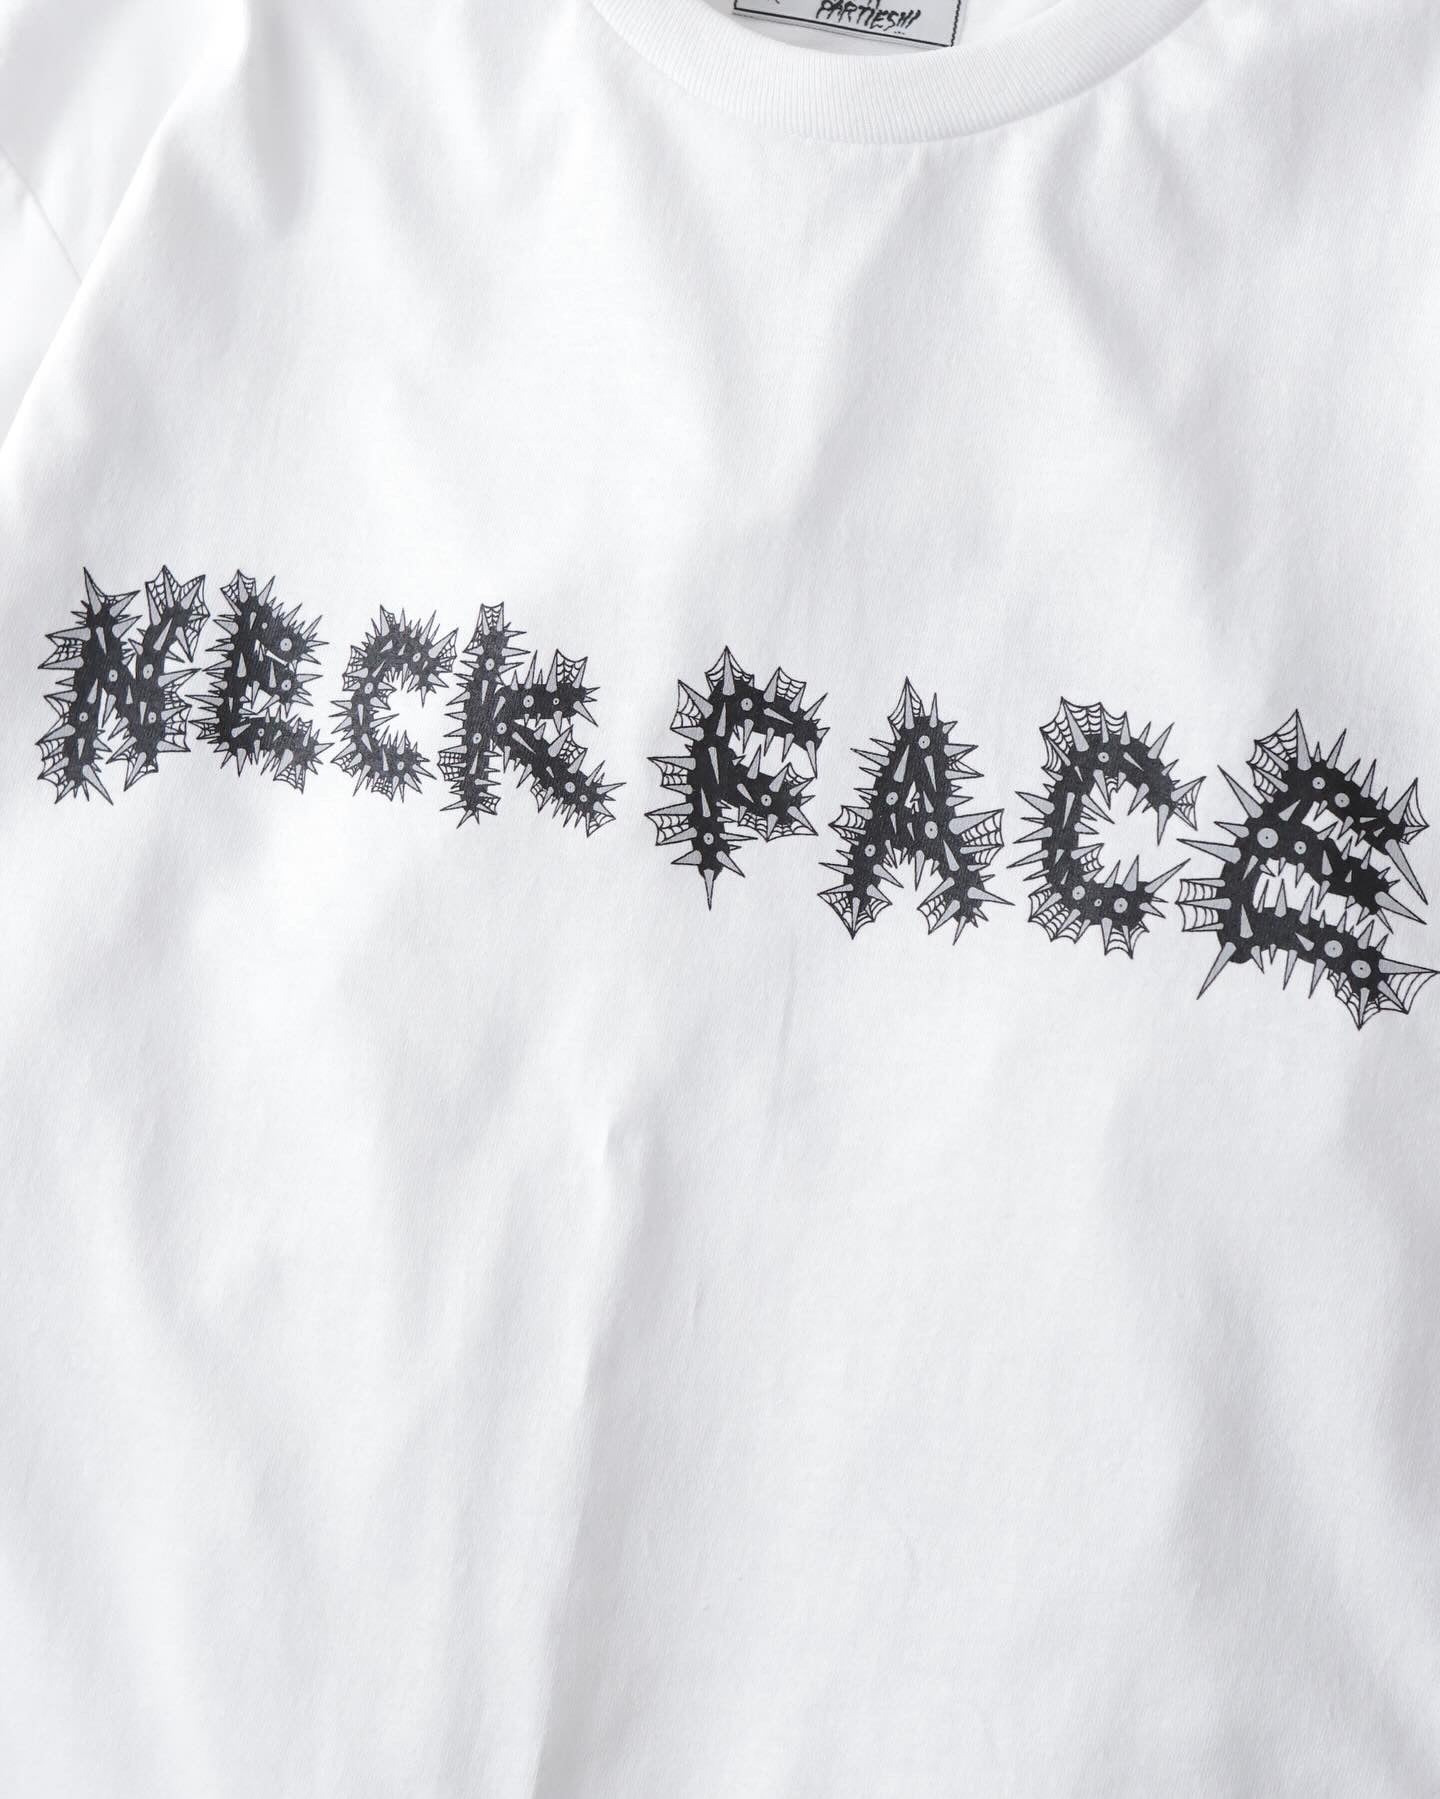 NECK FACE / CREW NECK T-SHIRT（TYPE-4）